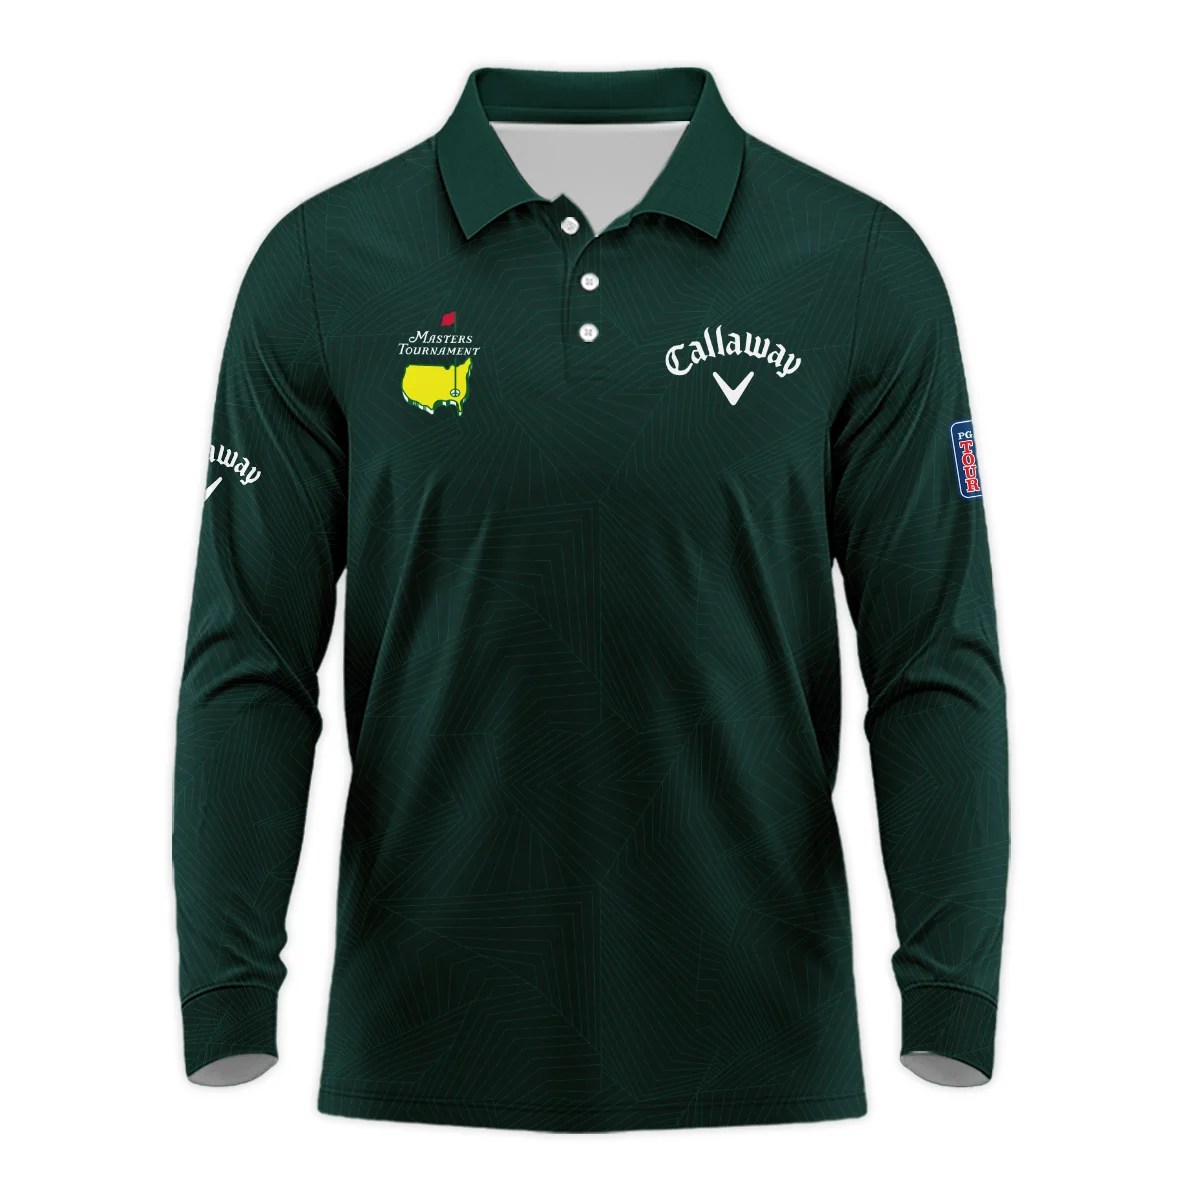 Masters Tournament Callaway Pattern Sport Jersey Dark Green Unisex Sweatshirt Style Classic Sweatshirt